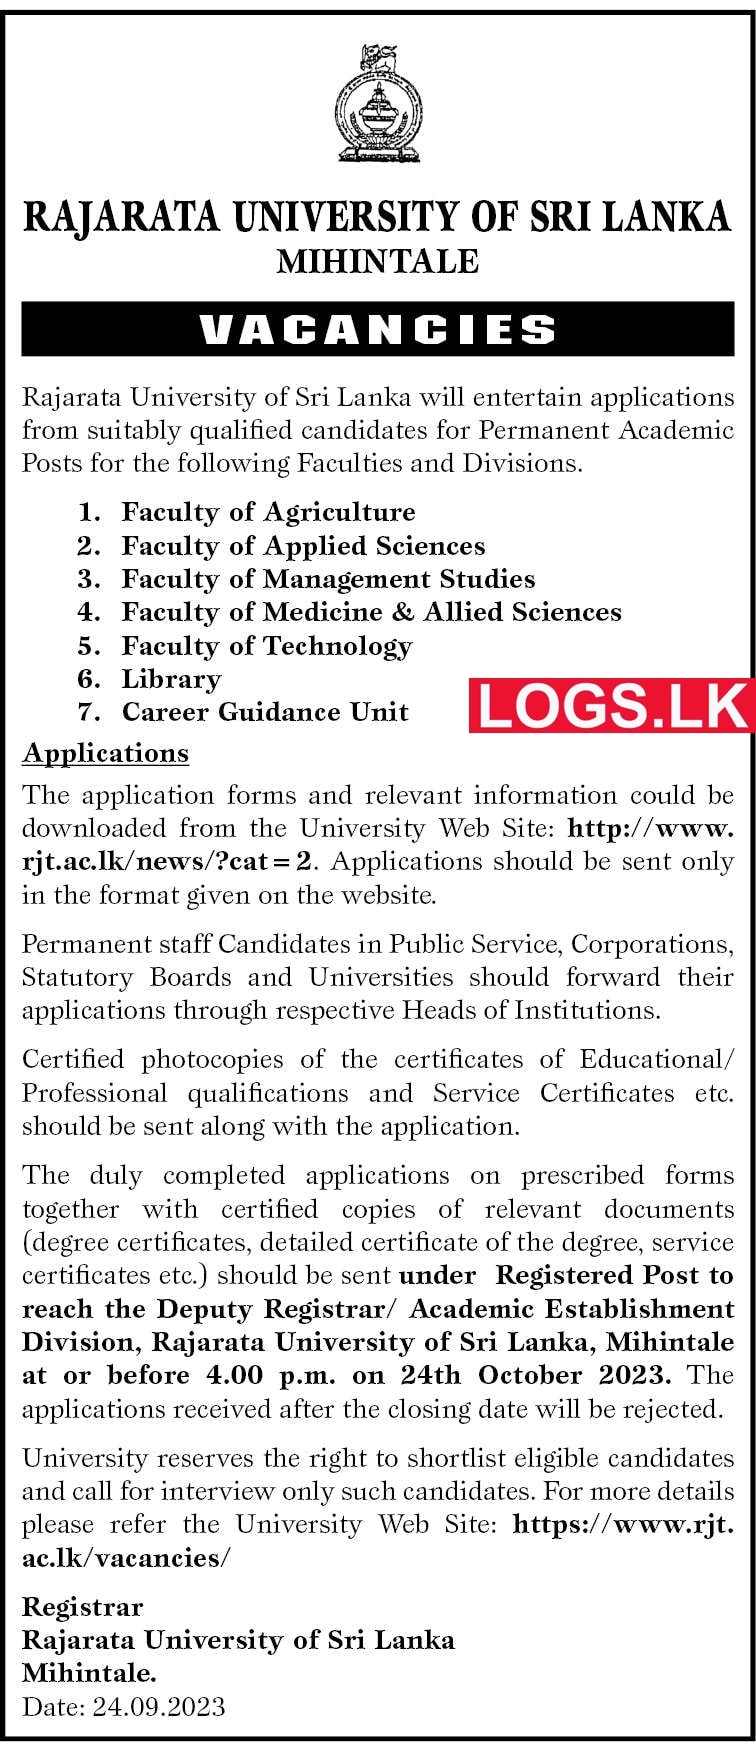 Rajarata University of Sri Lanka Mihintale Job Vacancies 2023 Application Form